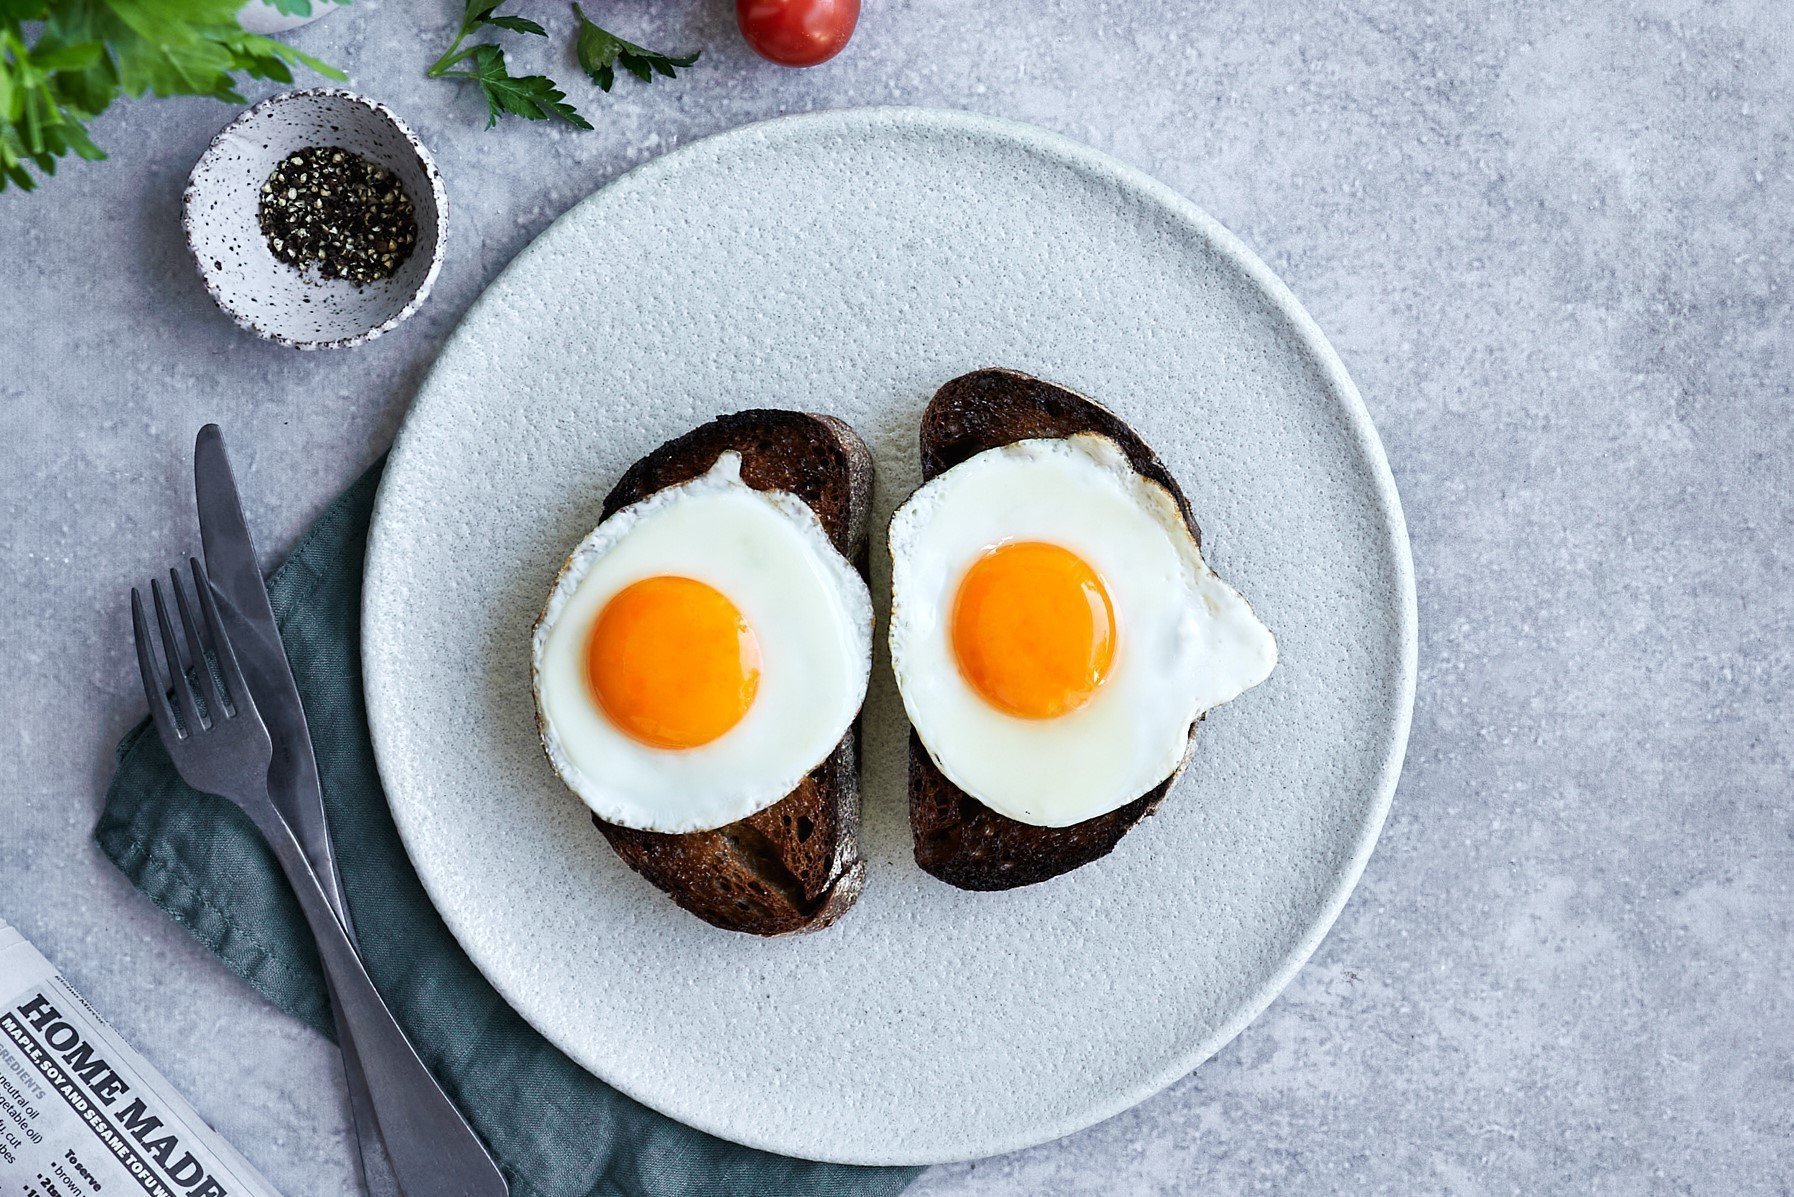 Fried Eggs Recipe: How to Make Fried Eggs - Australian Eggs